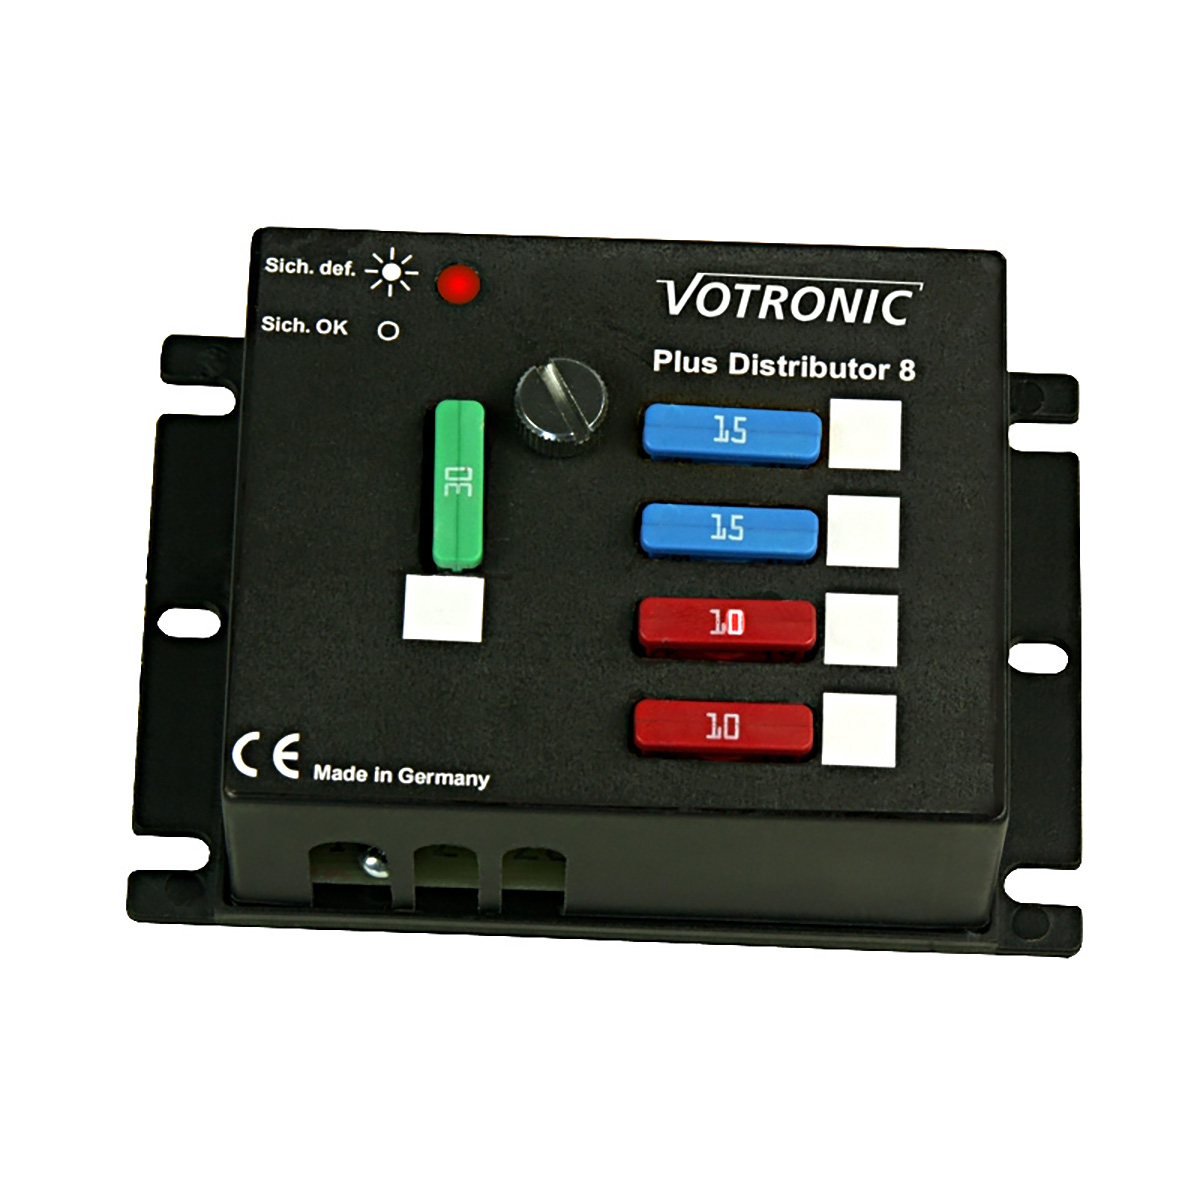 8 Wohnmobil VOTRONIC Distributor Plus-Distributor 3215